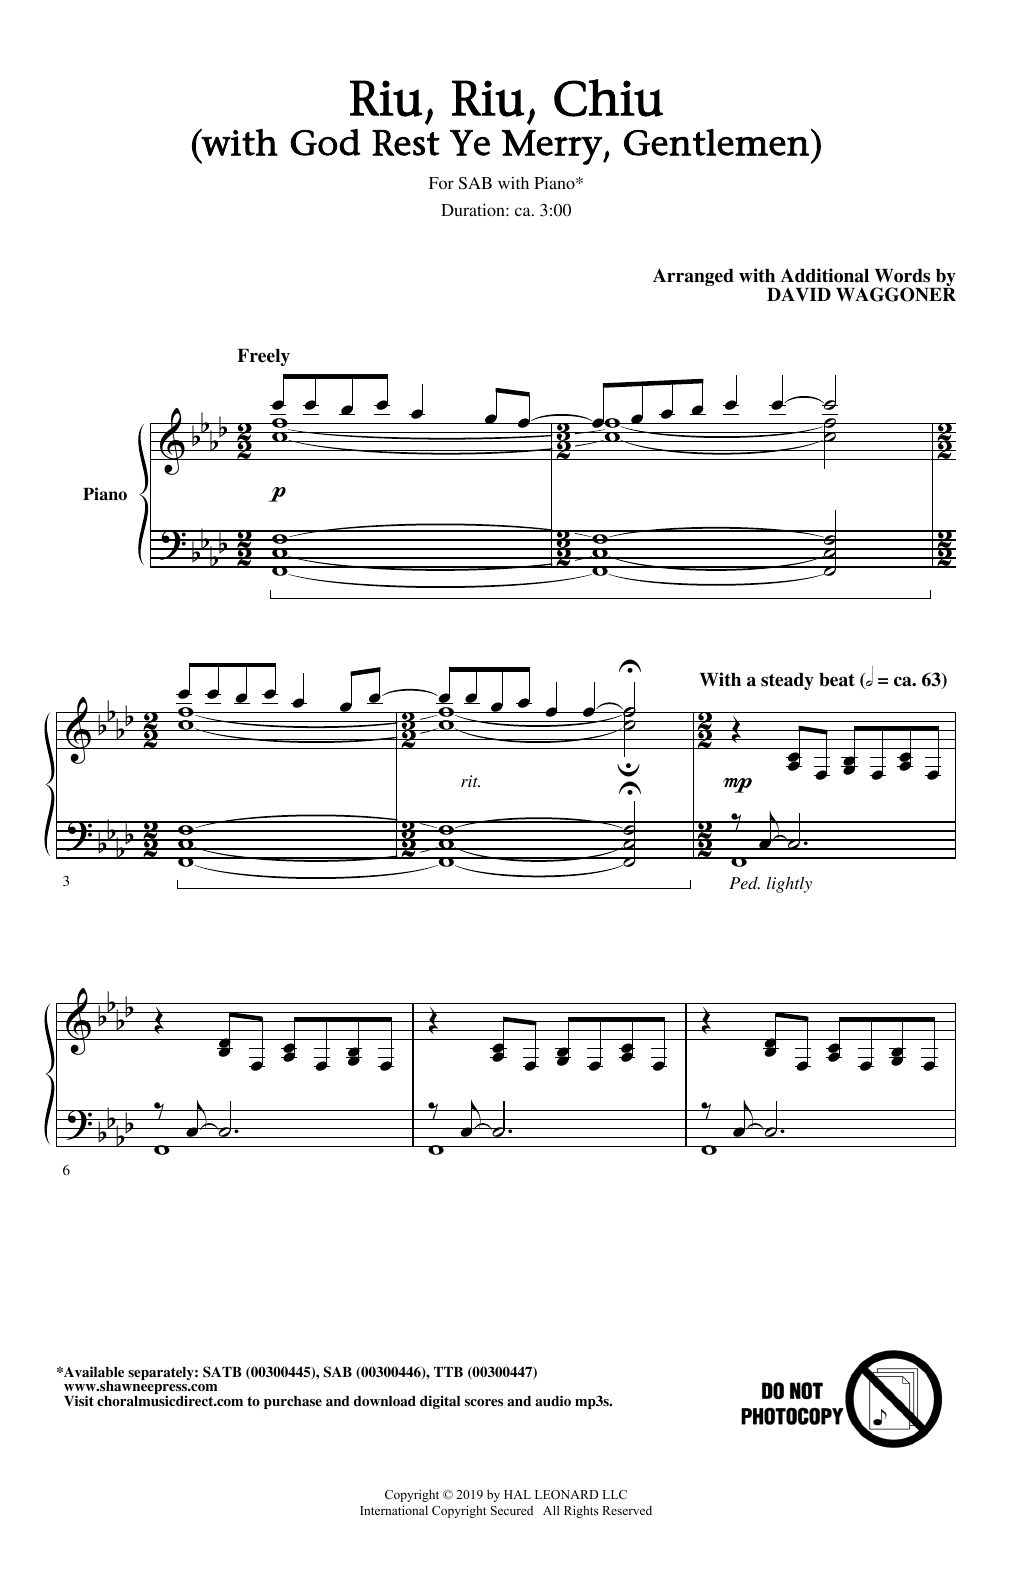 Traditional Carol Riu, Riu, Chiu (with God Rest Ye Merry, Gentlemen) (arr. David Waggoner) Sheet Music Notes & Chords for SATB Choir - Download or Print PDF